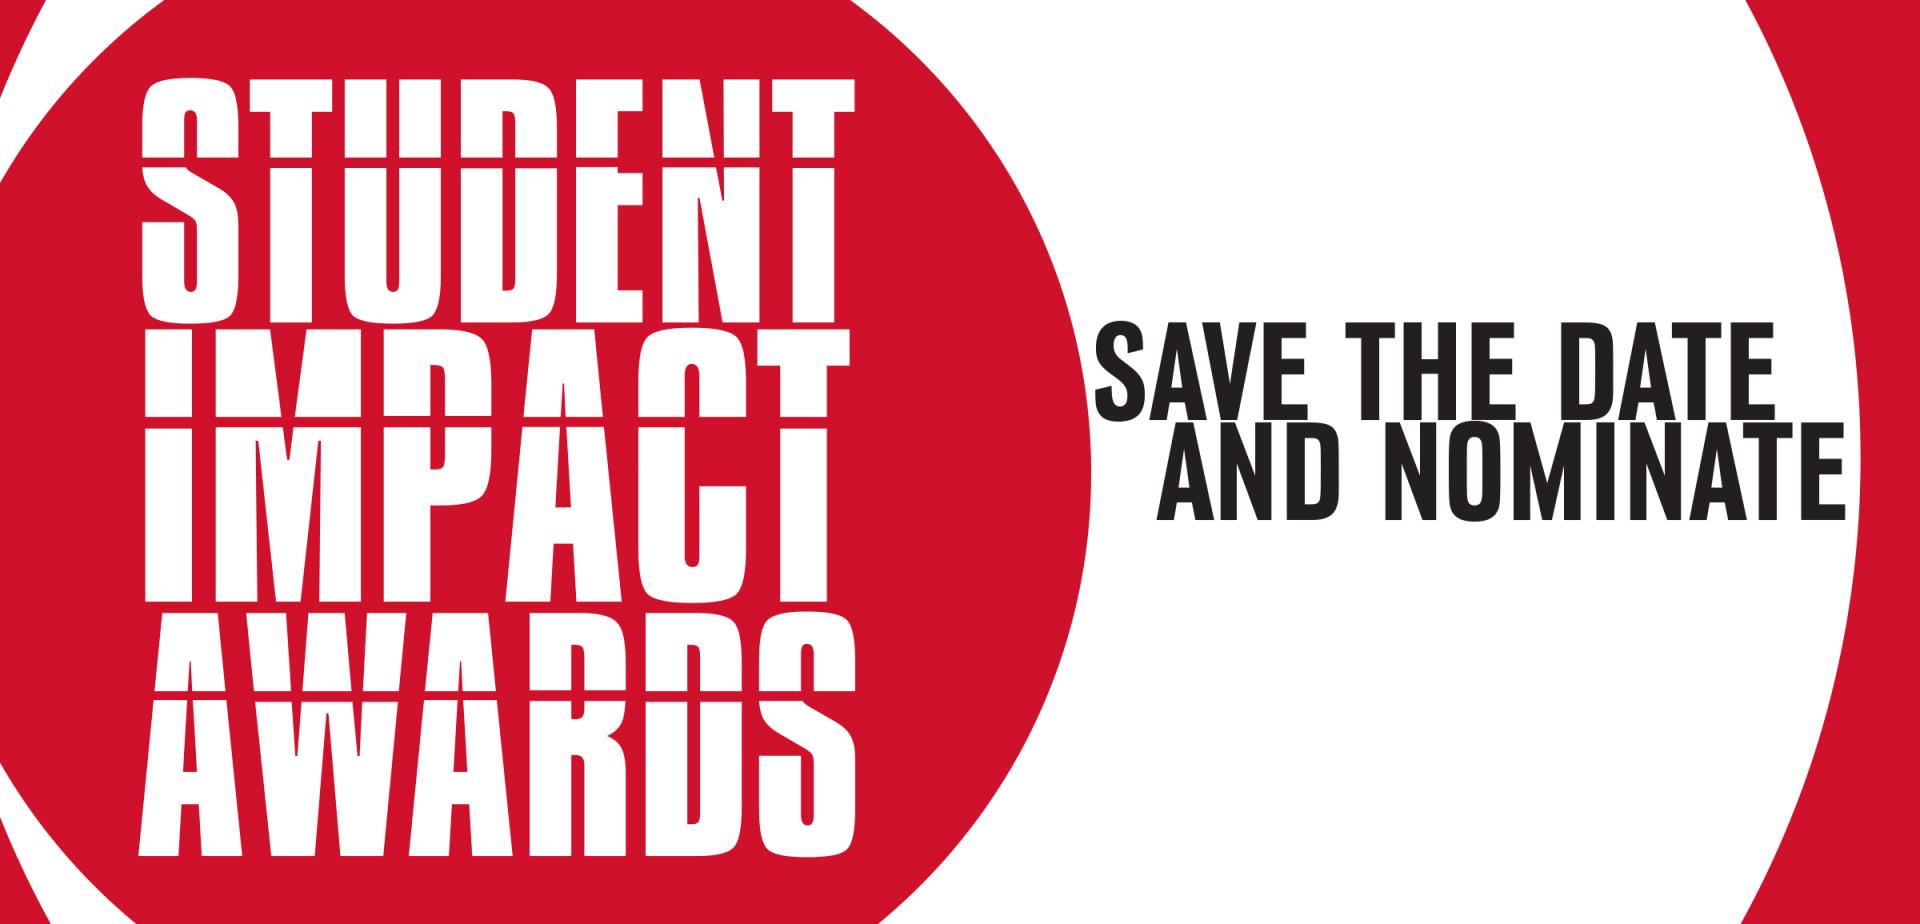 student impact awards